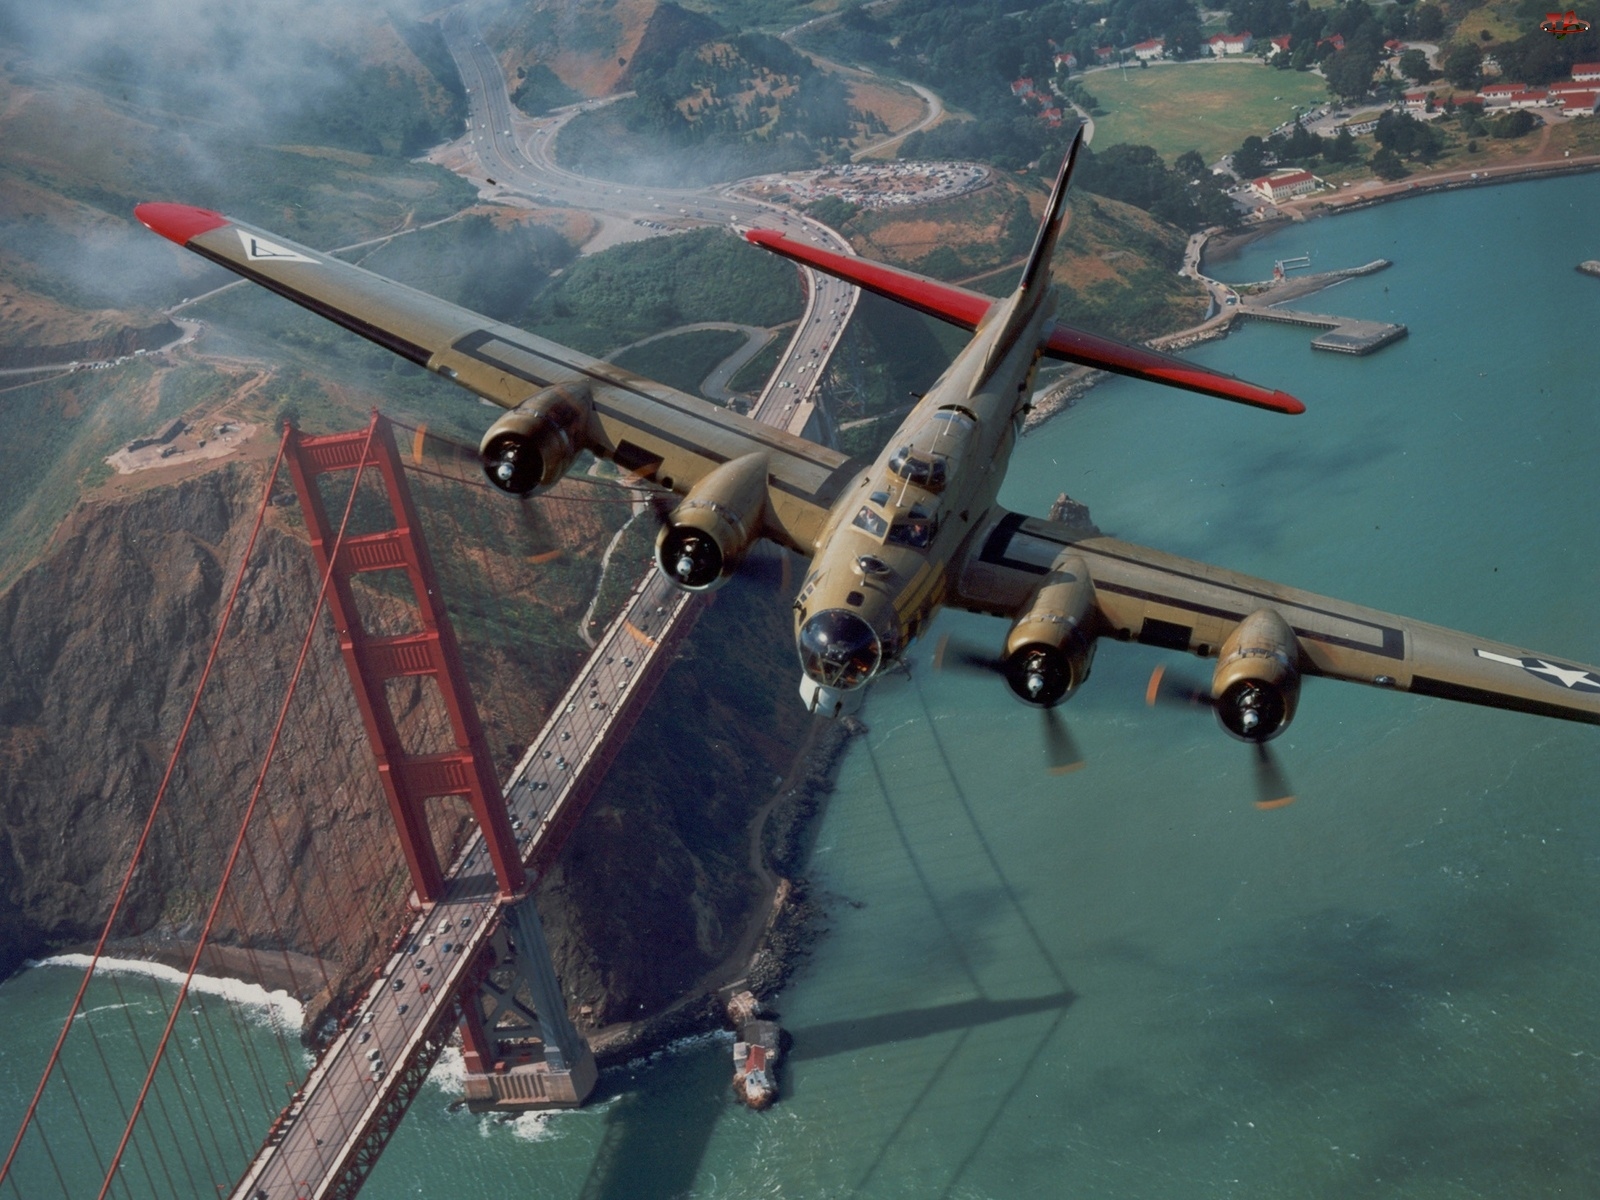 Most Golden Gate, Samolot, Turbośmigłowy